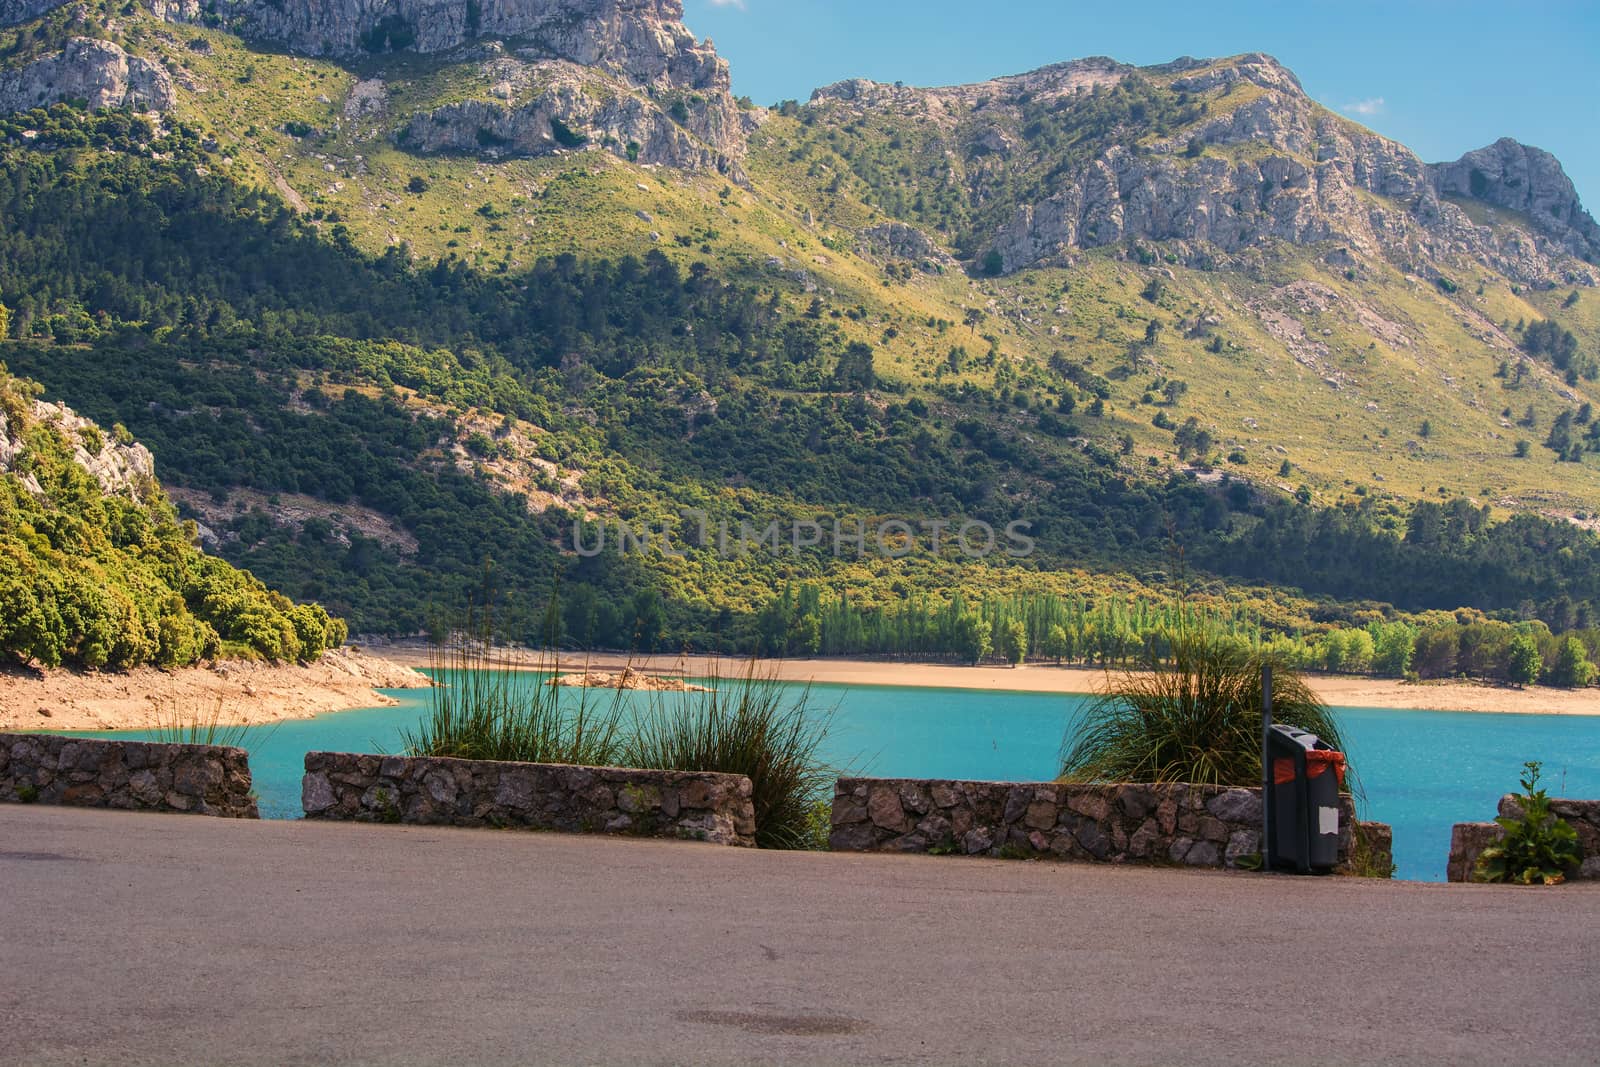  Cuber reservoir in the Sierra de Tramuntana, Mallorca, Spain    by JFsPic